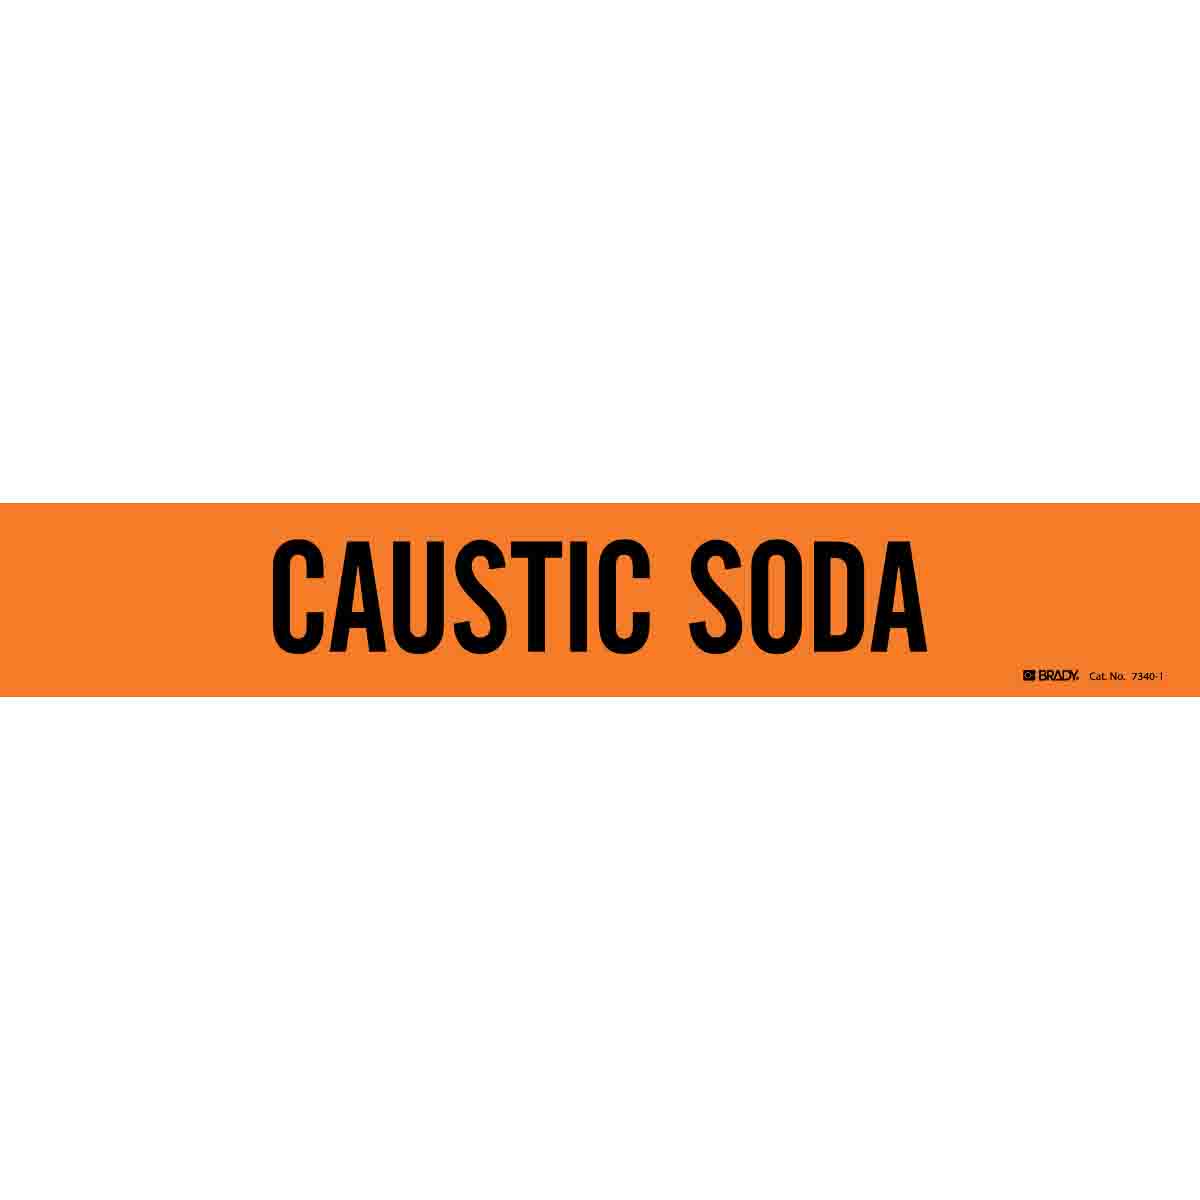 CAUSTIC SODA BLACK / ORANGE